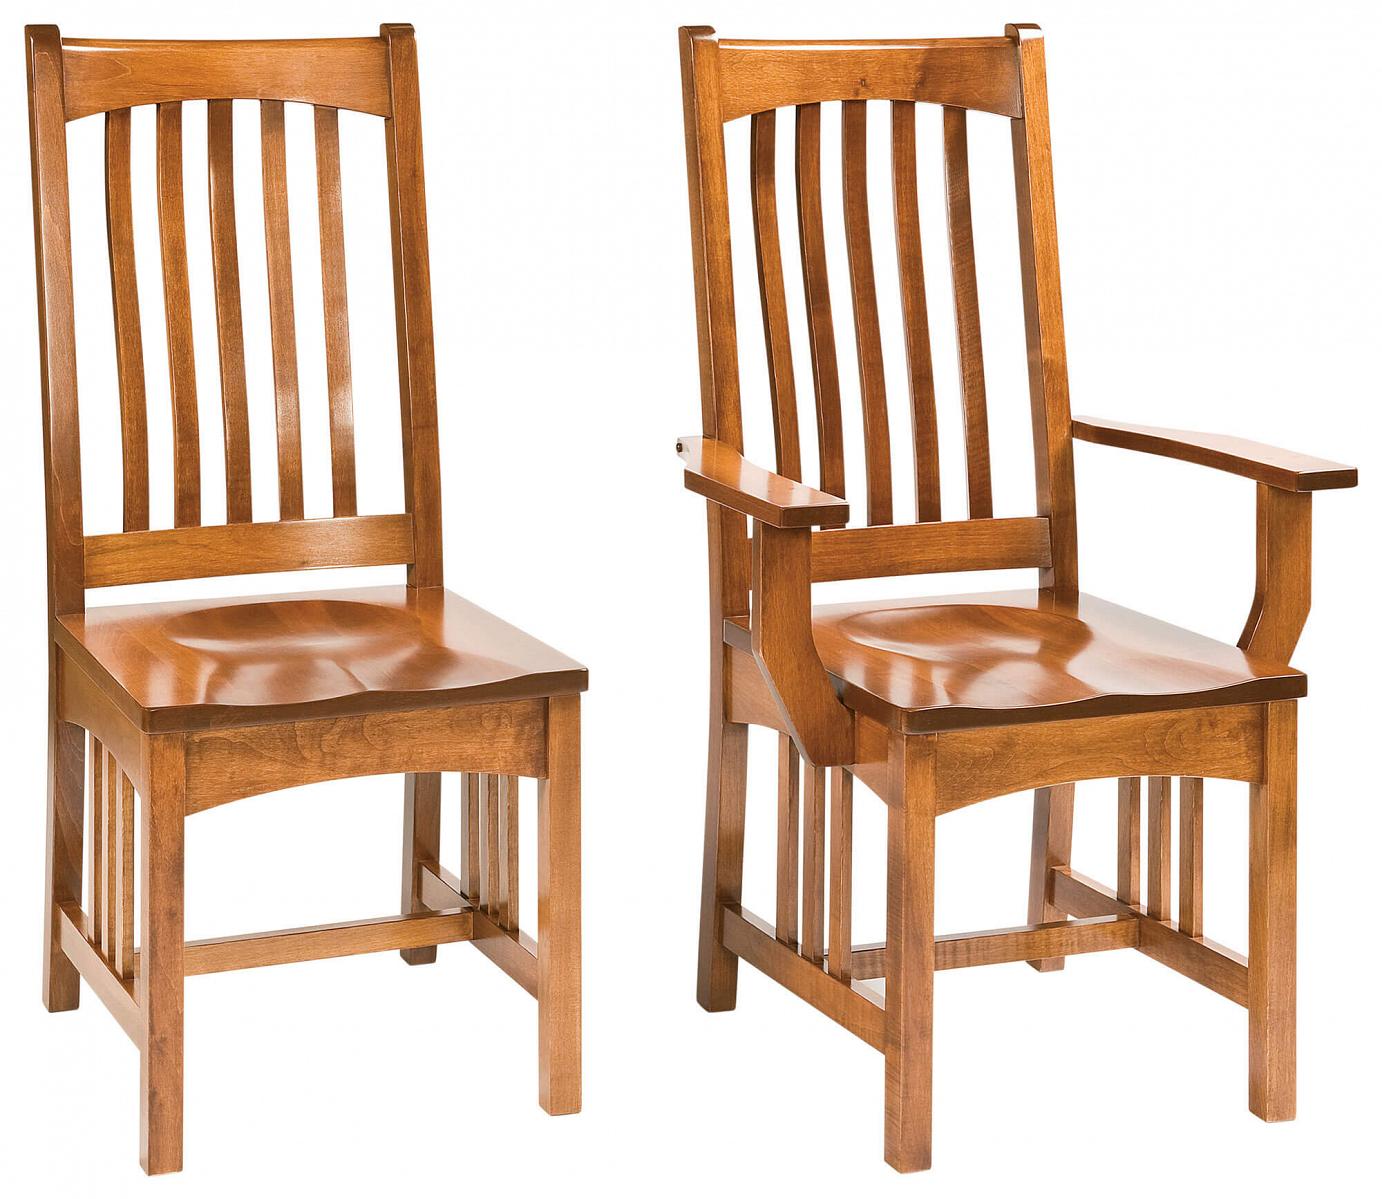 RH Yoder Elridge Chairs